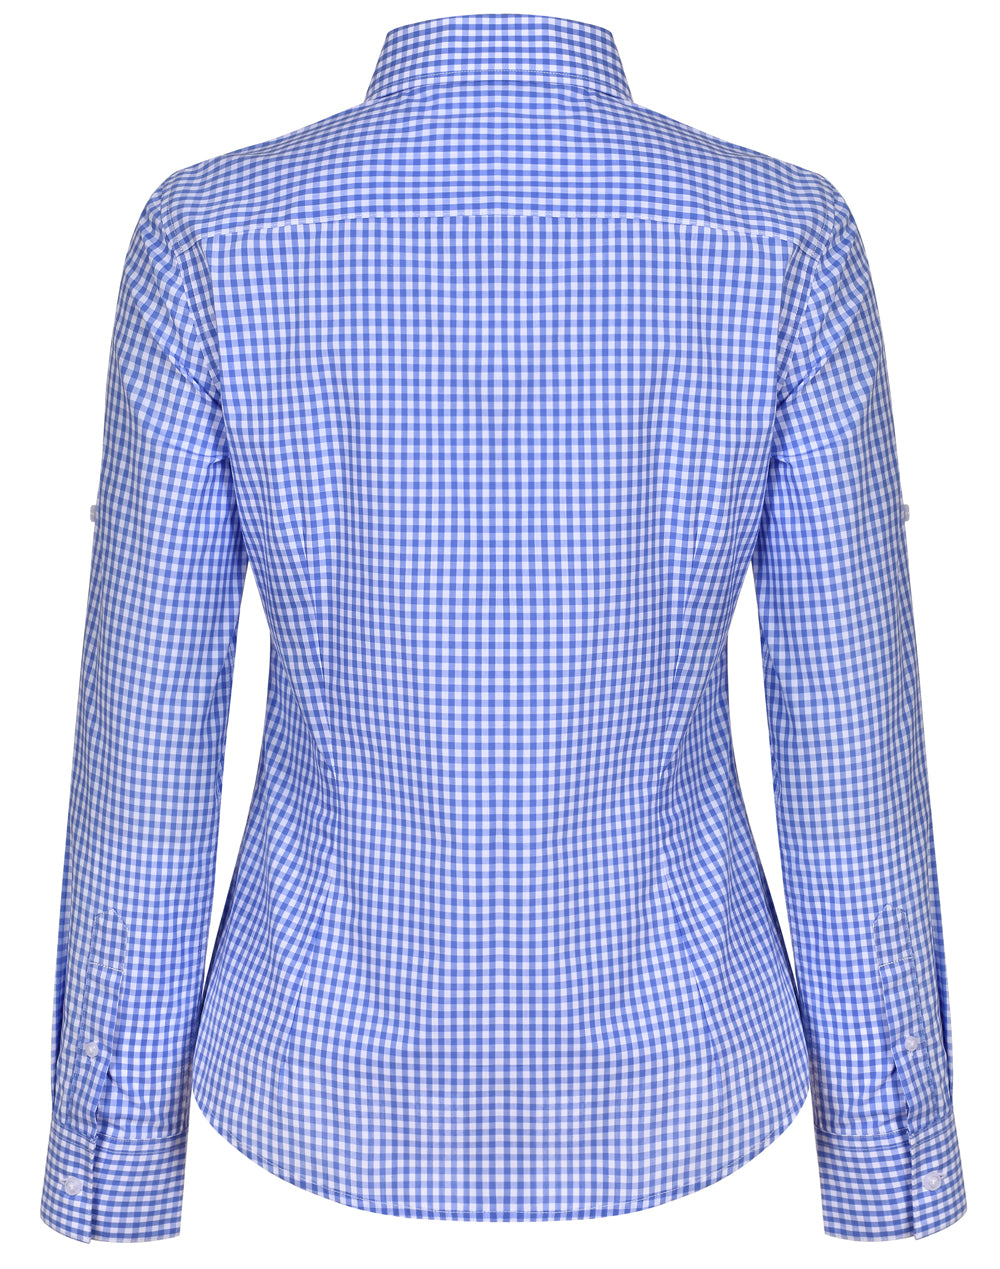 Benchmark M8300L Ladies' Gingham Check Long Sleeve Shirt